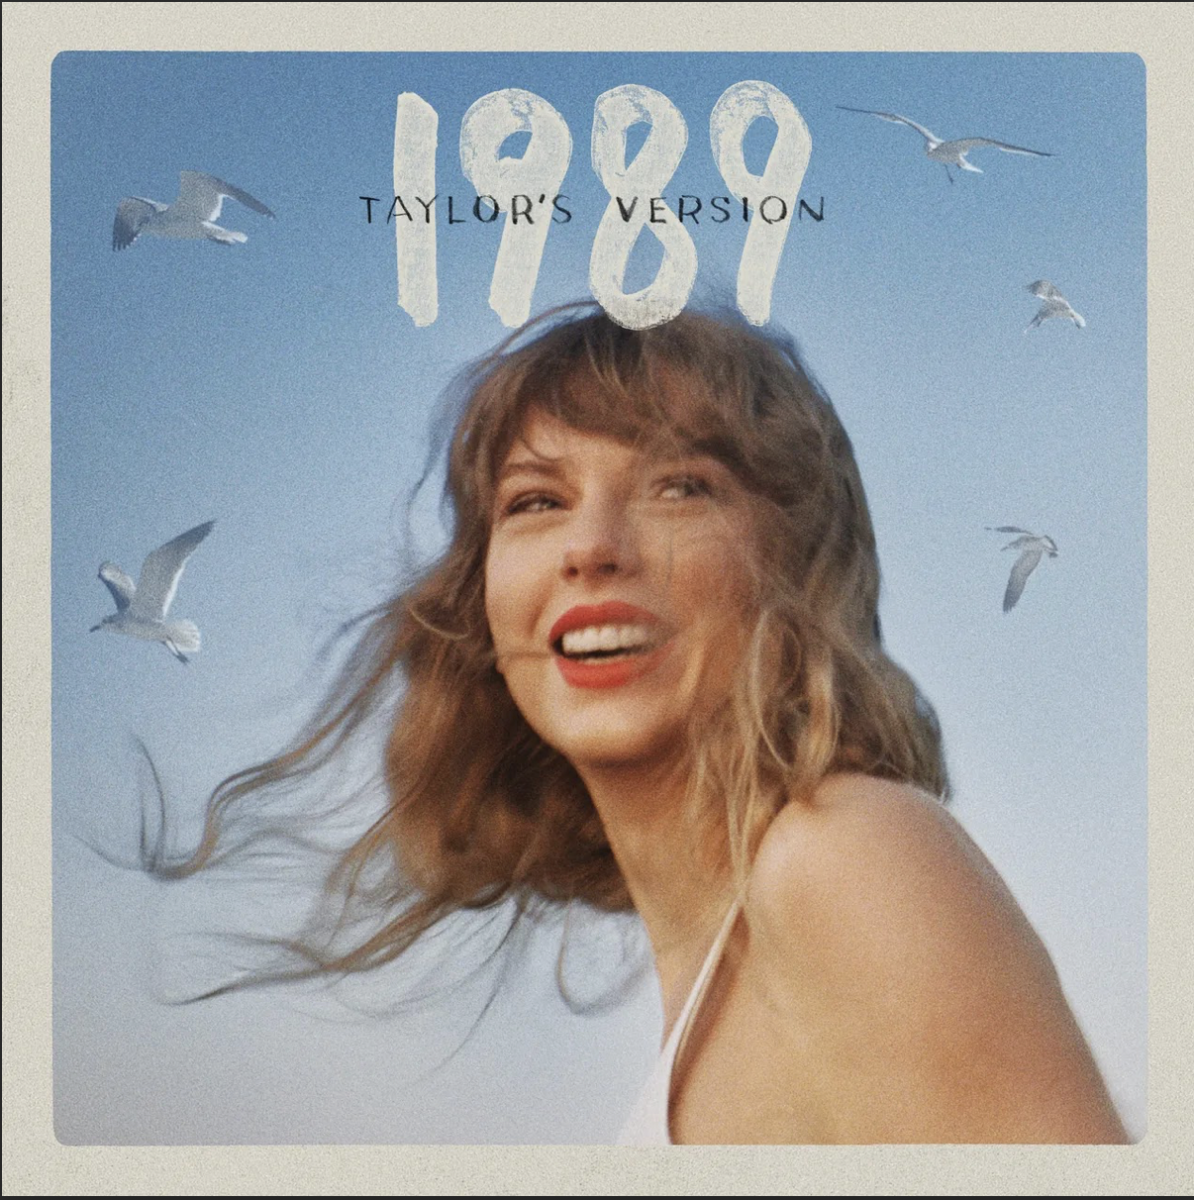 Swift released the album Oct. 27